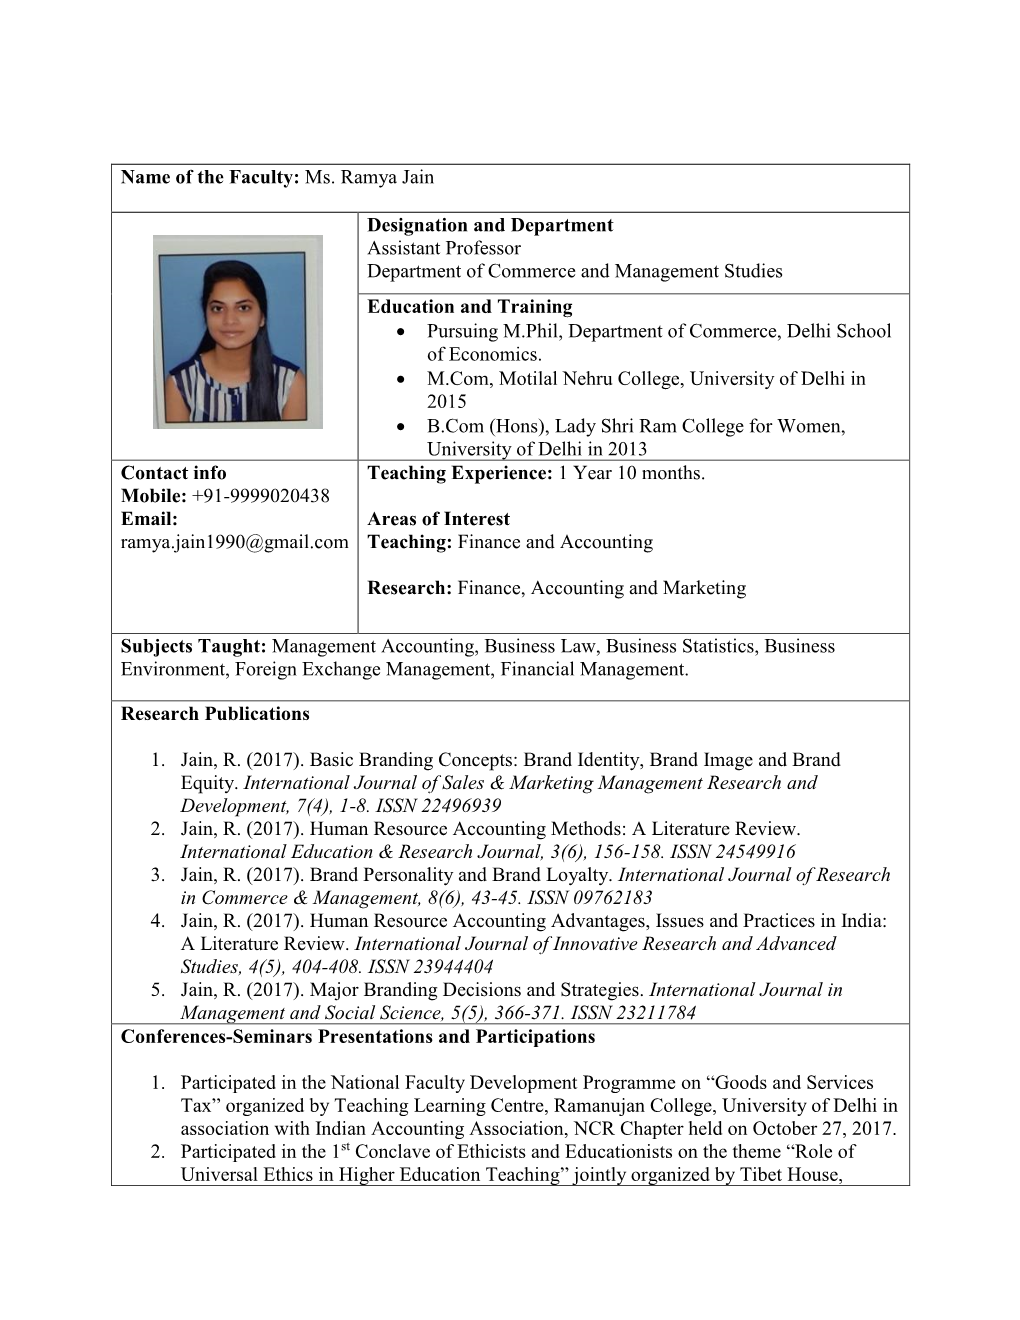 Name of the Faculty: Ms. Ramya Jain Designation